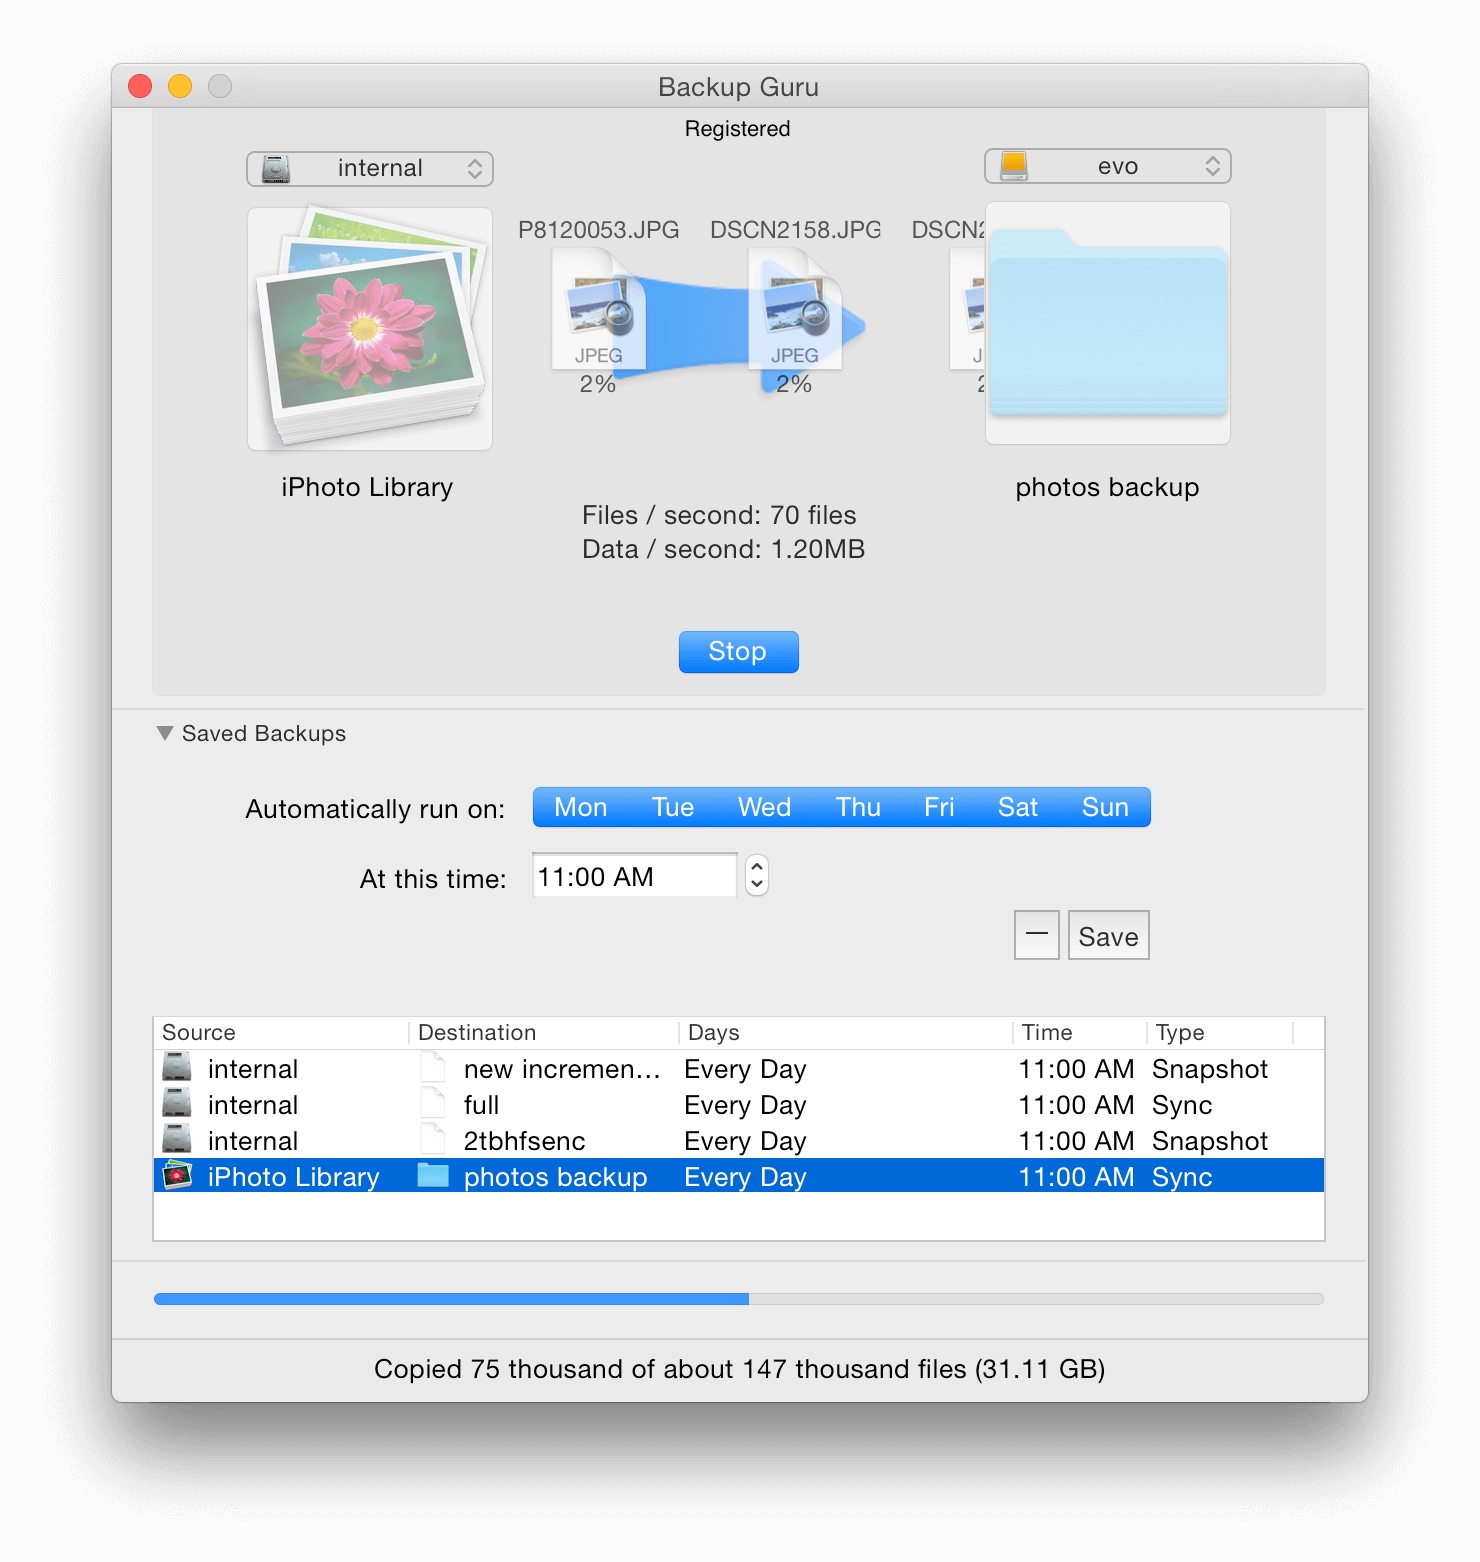 best external hard drive for mac time machine 2015